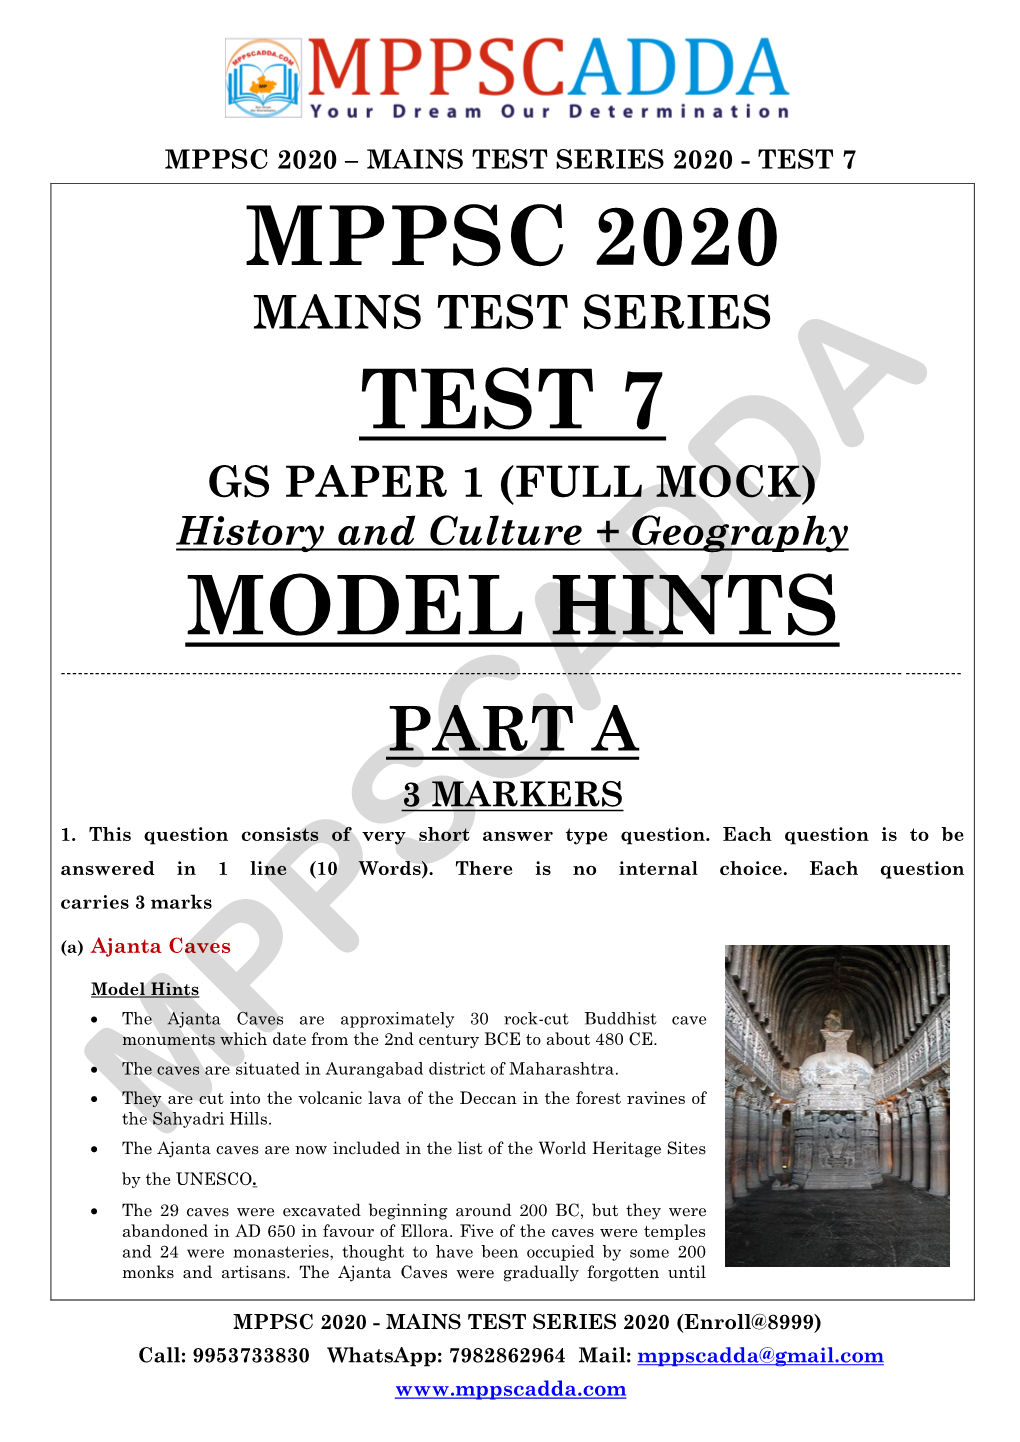 Mppsc 2020 Test 7 Model Hints